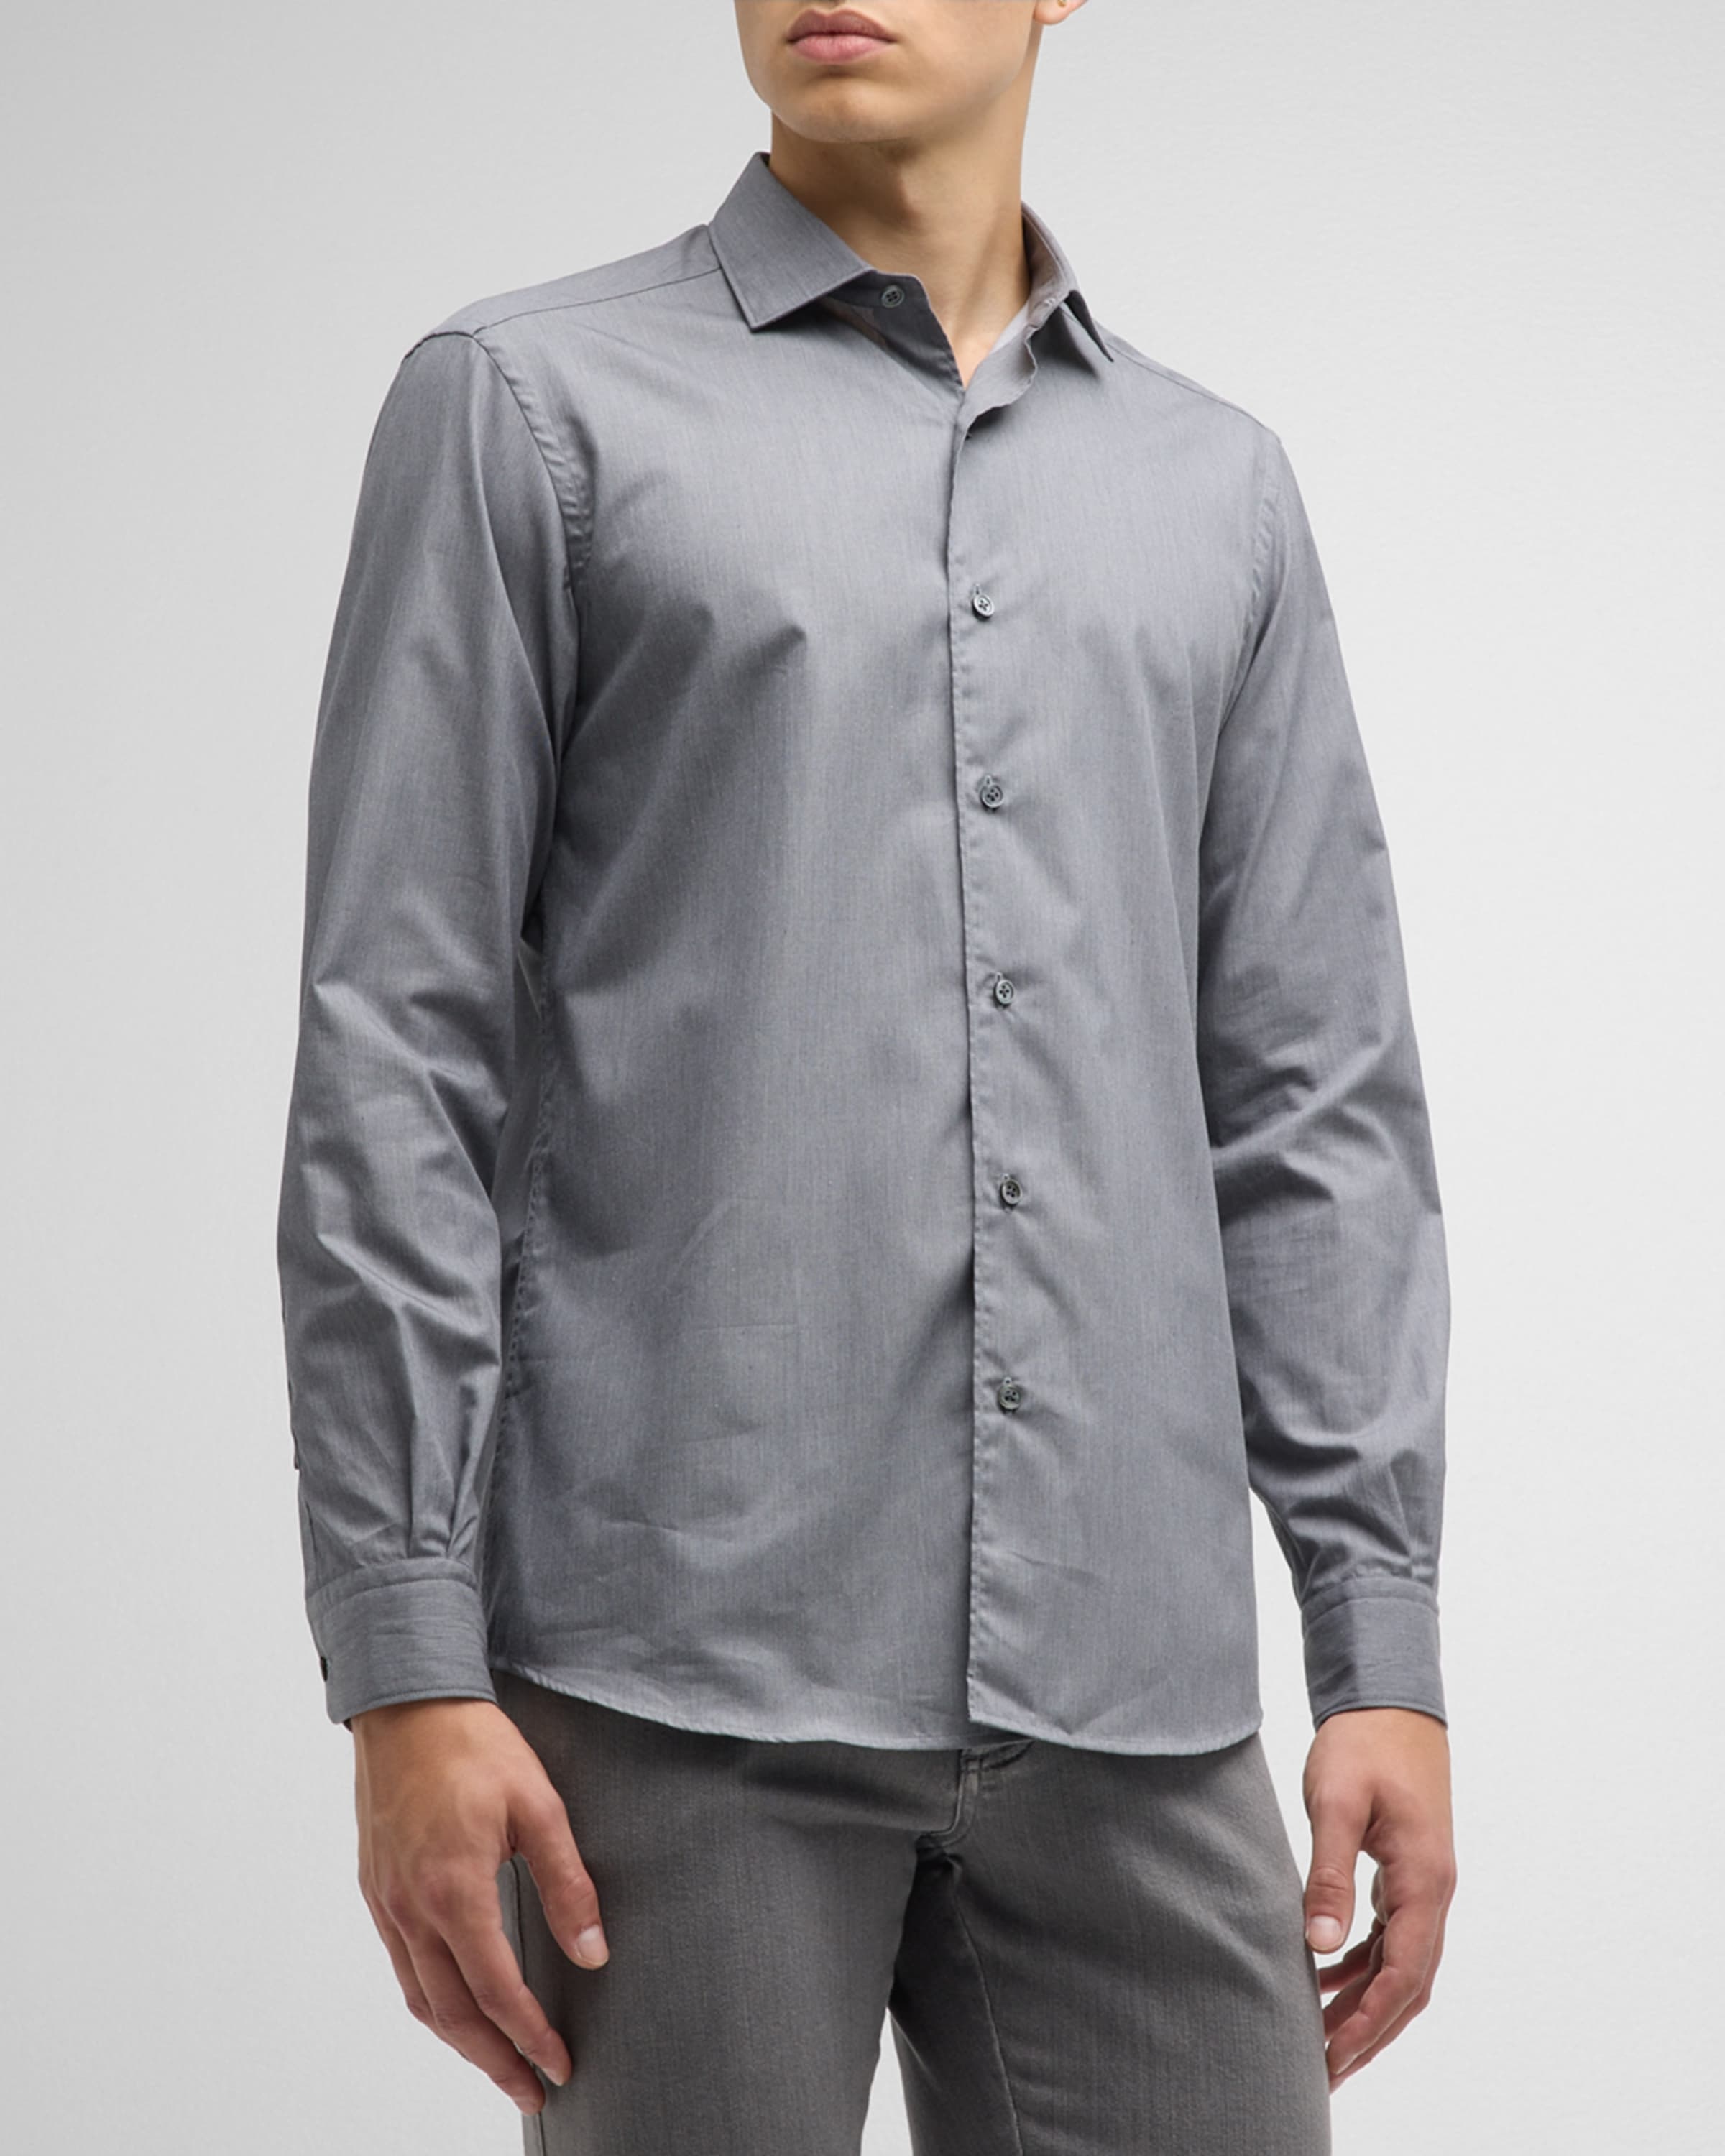 Men's Premium Cotton Sport Shirt - 2